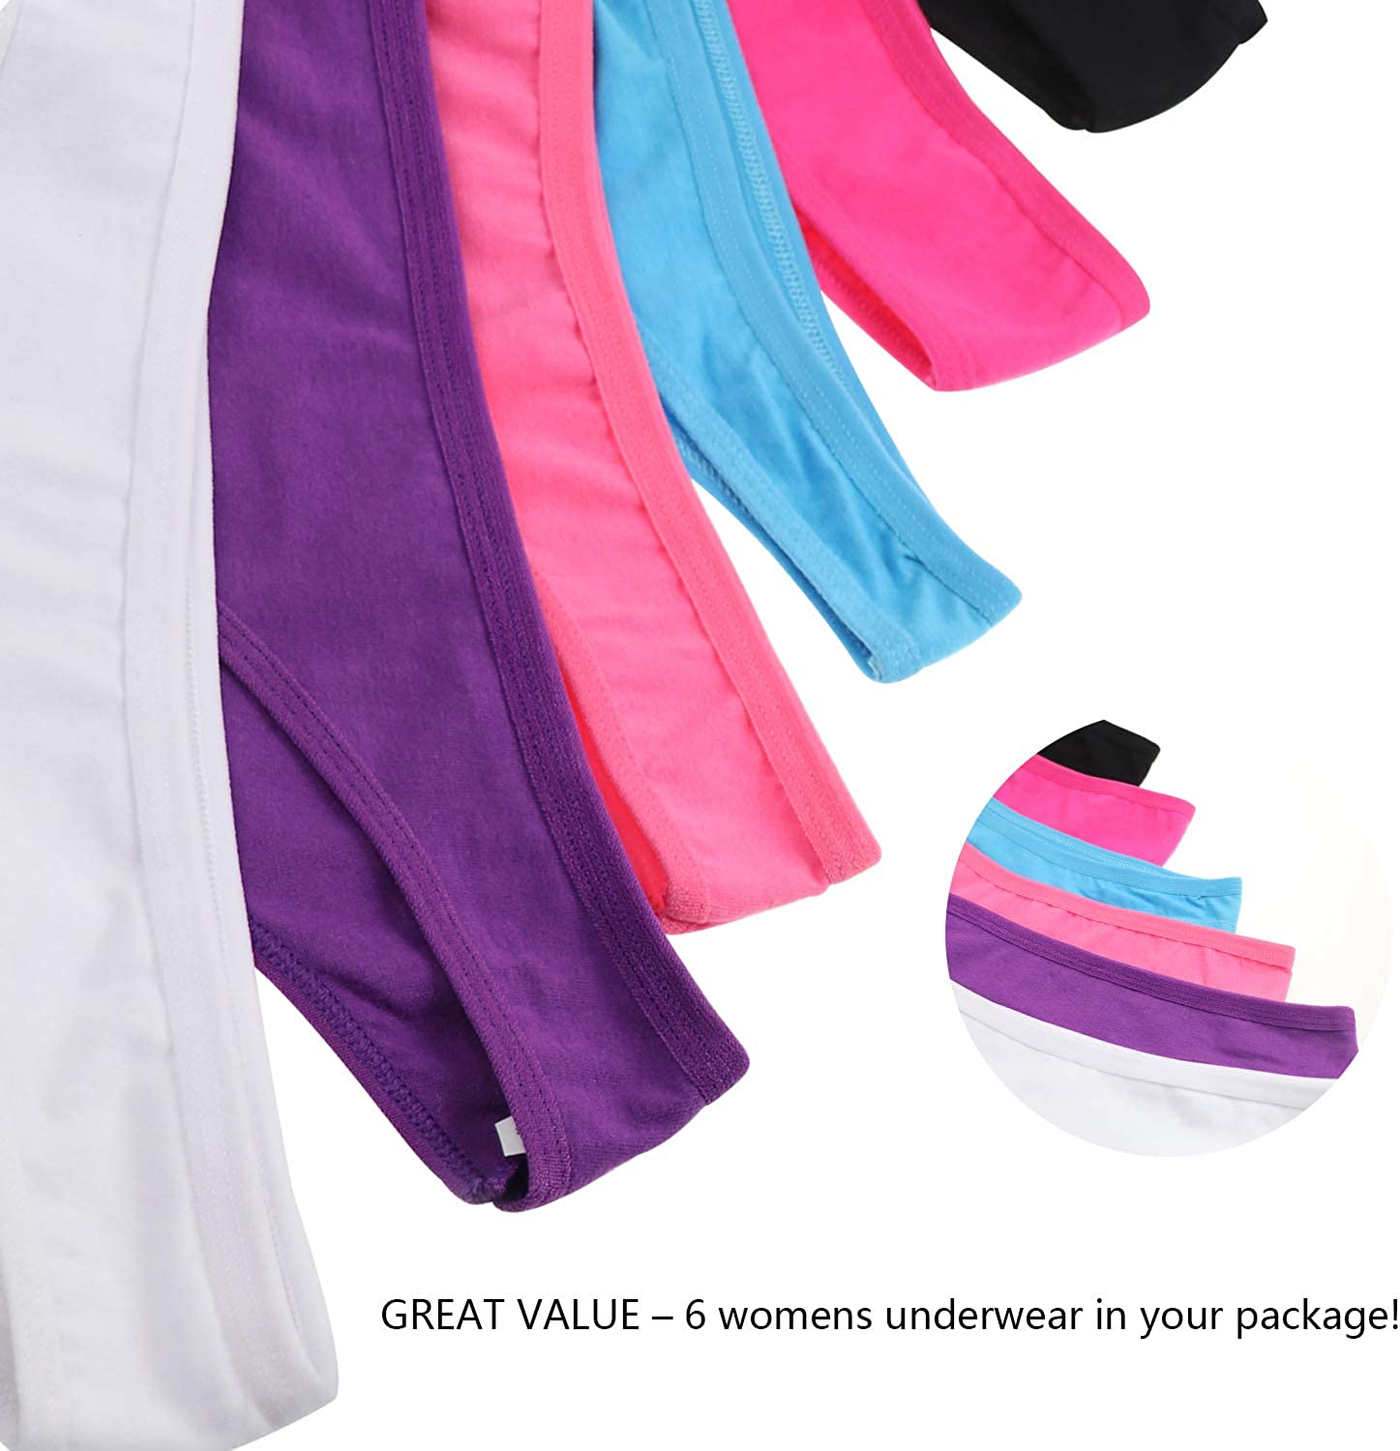 6 Pack Women’s Breathable Cotton Thong Panties Bikini Underwear